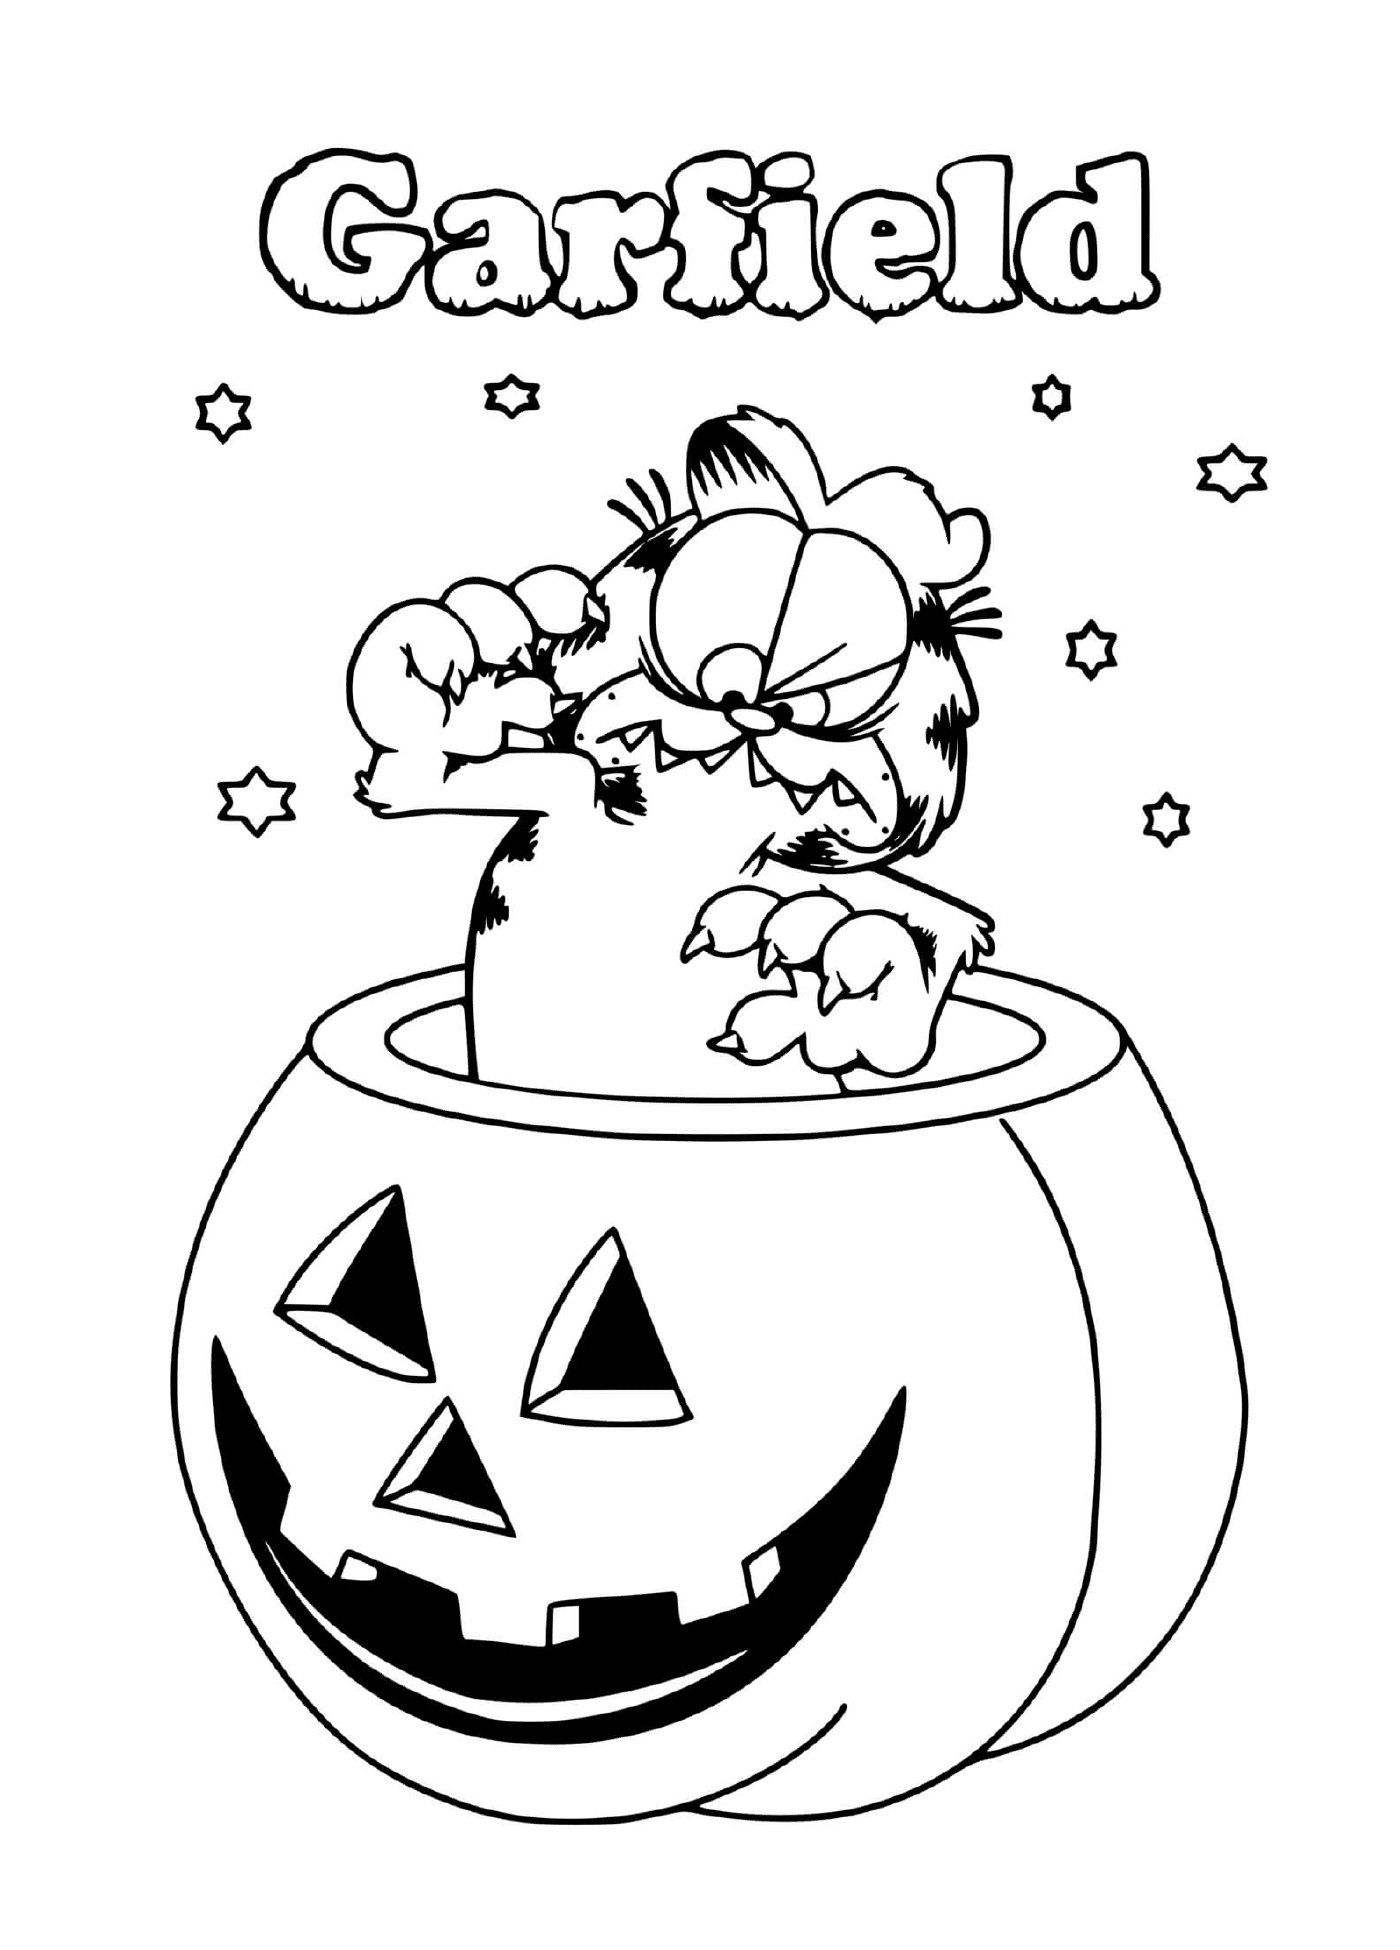  Garfield celebrates Halloween in a pumpkin 